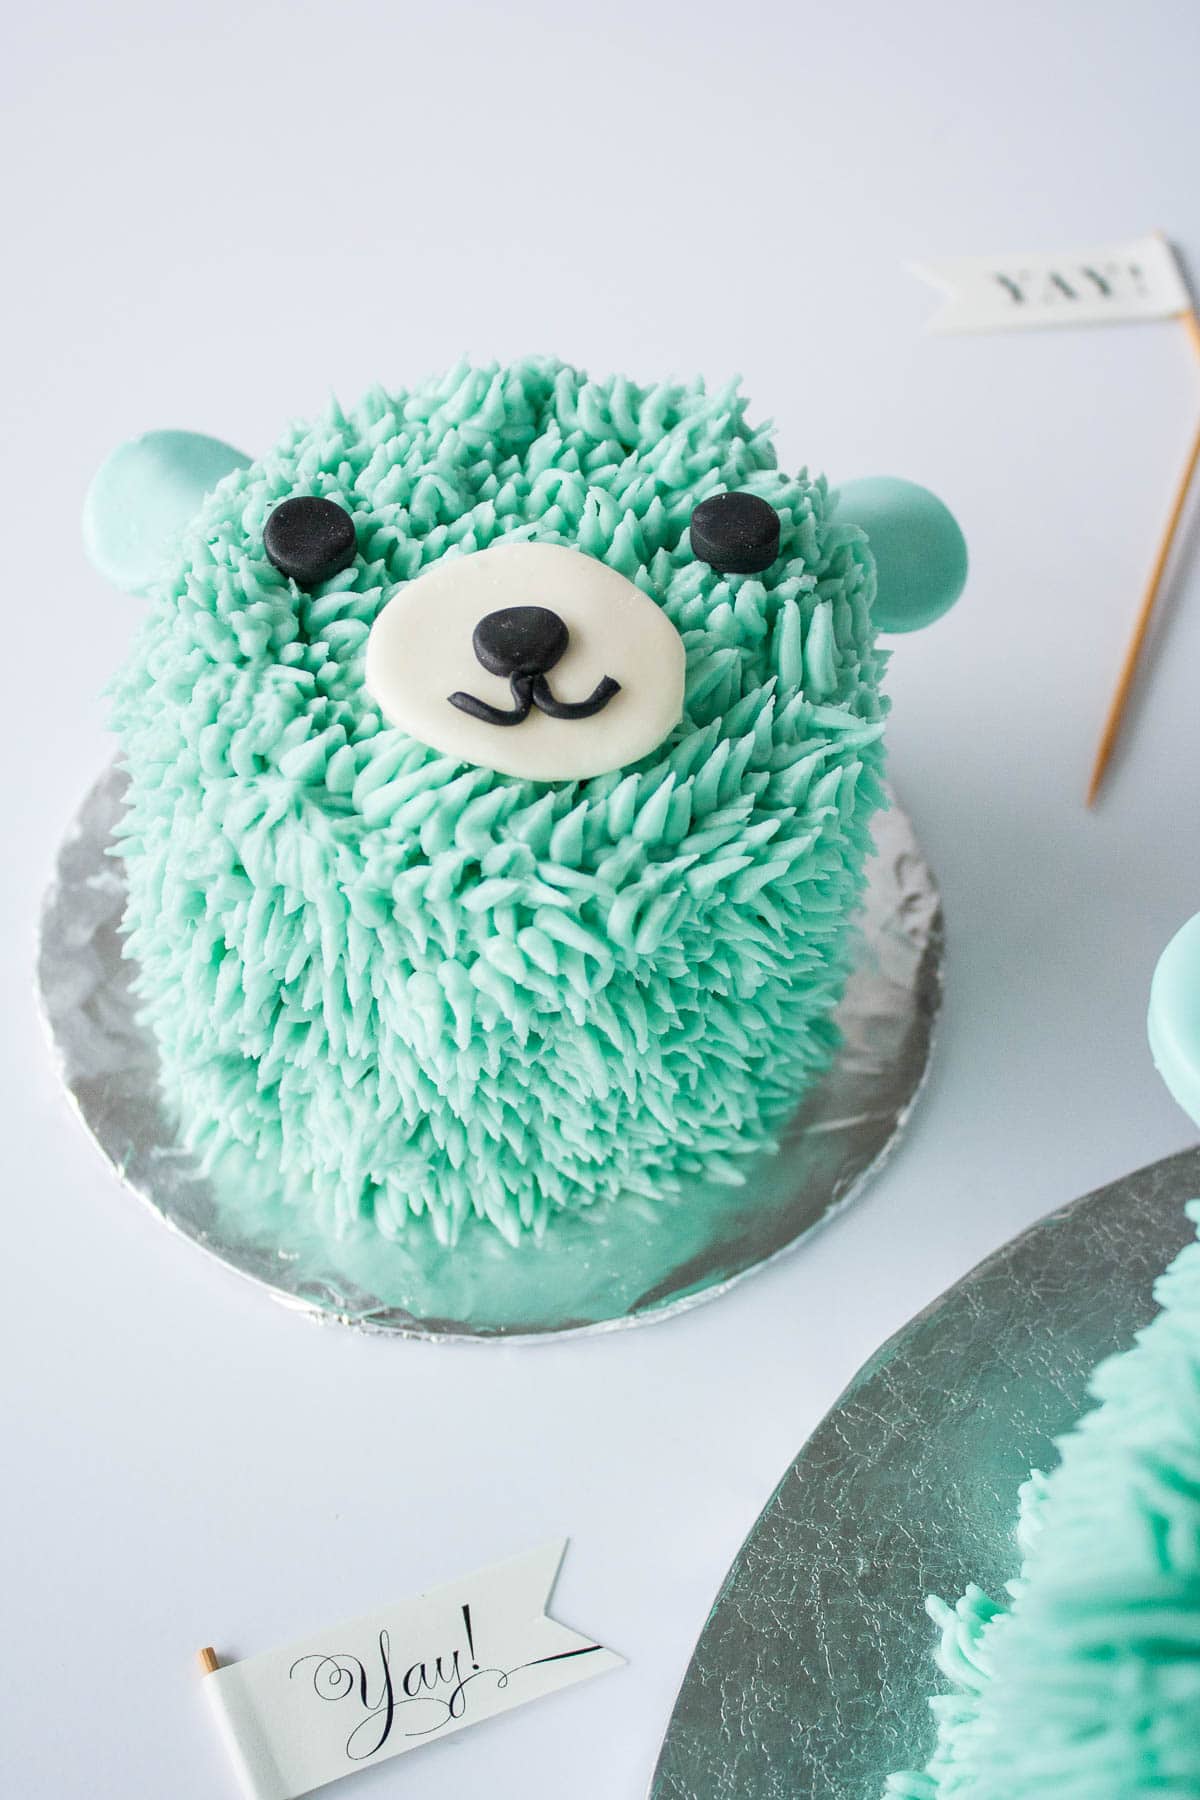 Close up of the mini bear cake.